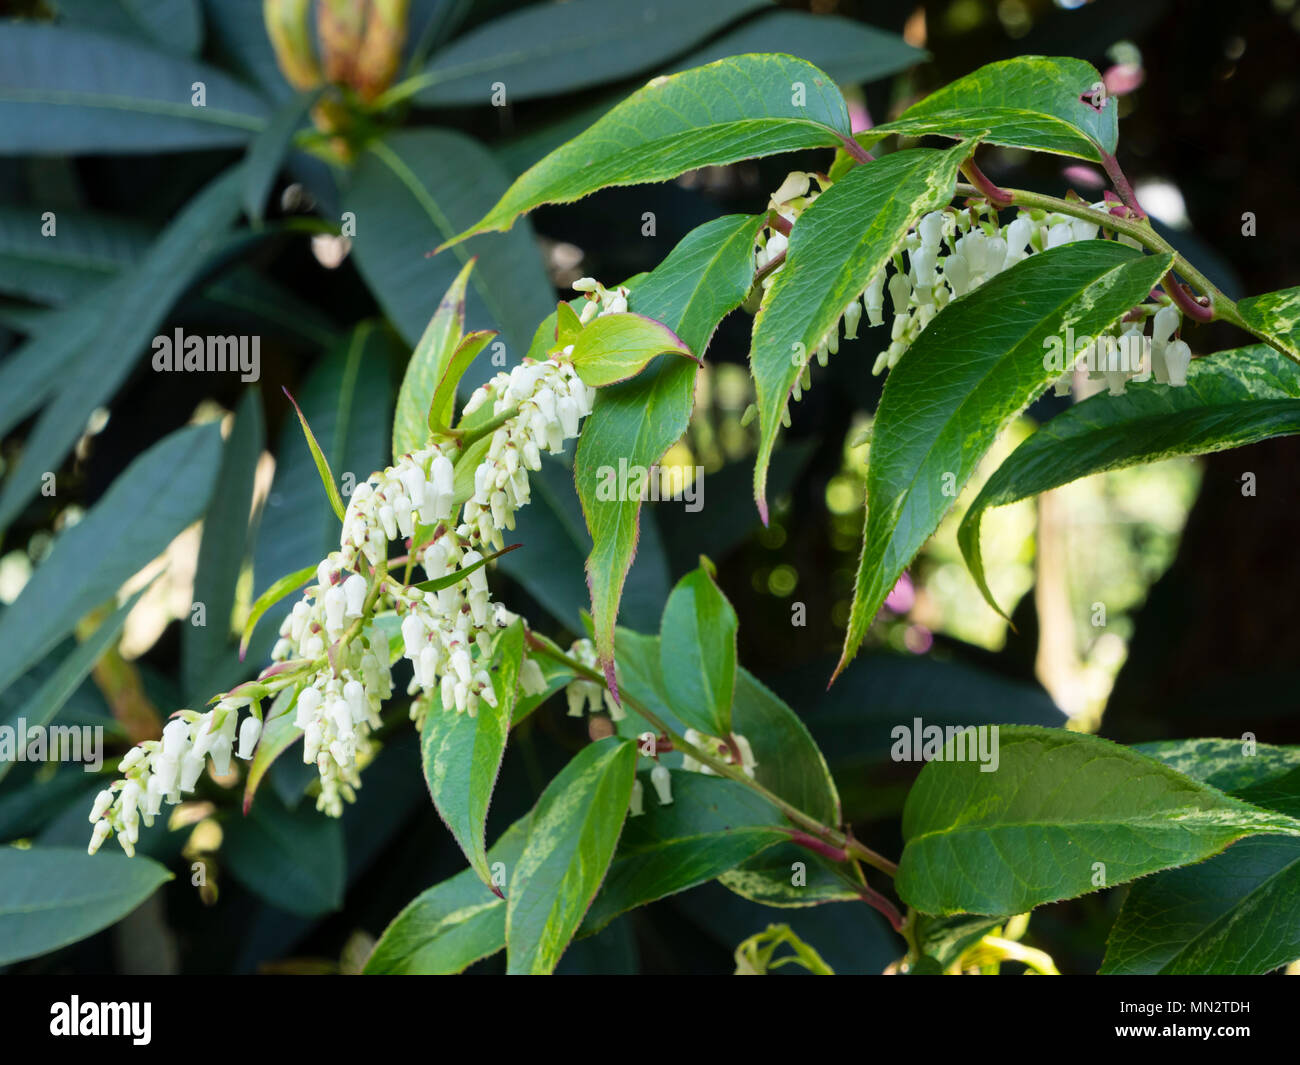 White flowers and arching stems of lightly variegated foliage of the hardy shrub, Leucothoe fontanesiana 'Rainbow' Stock Photo